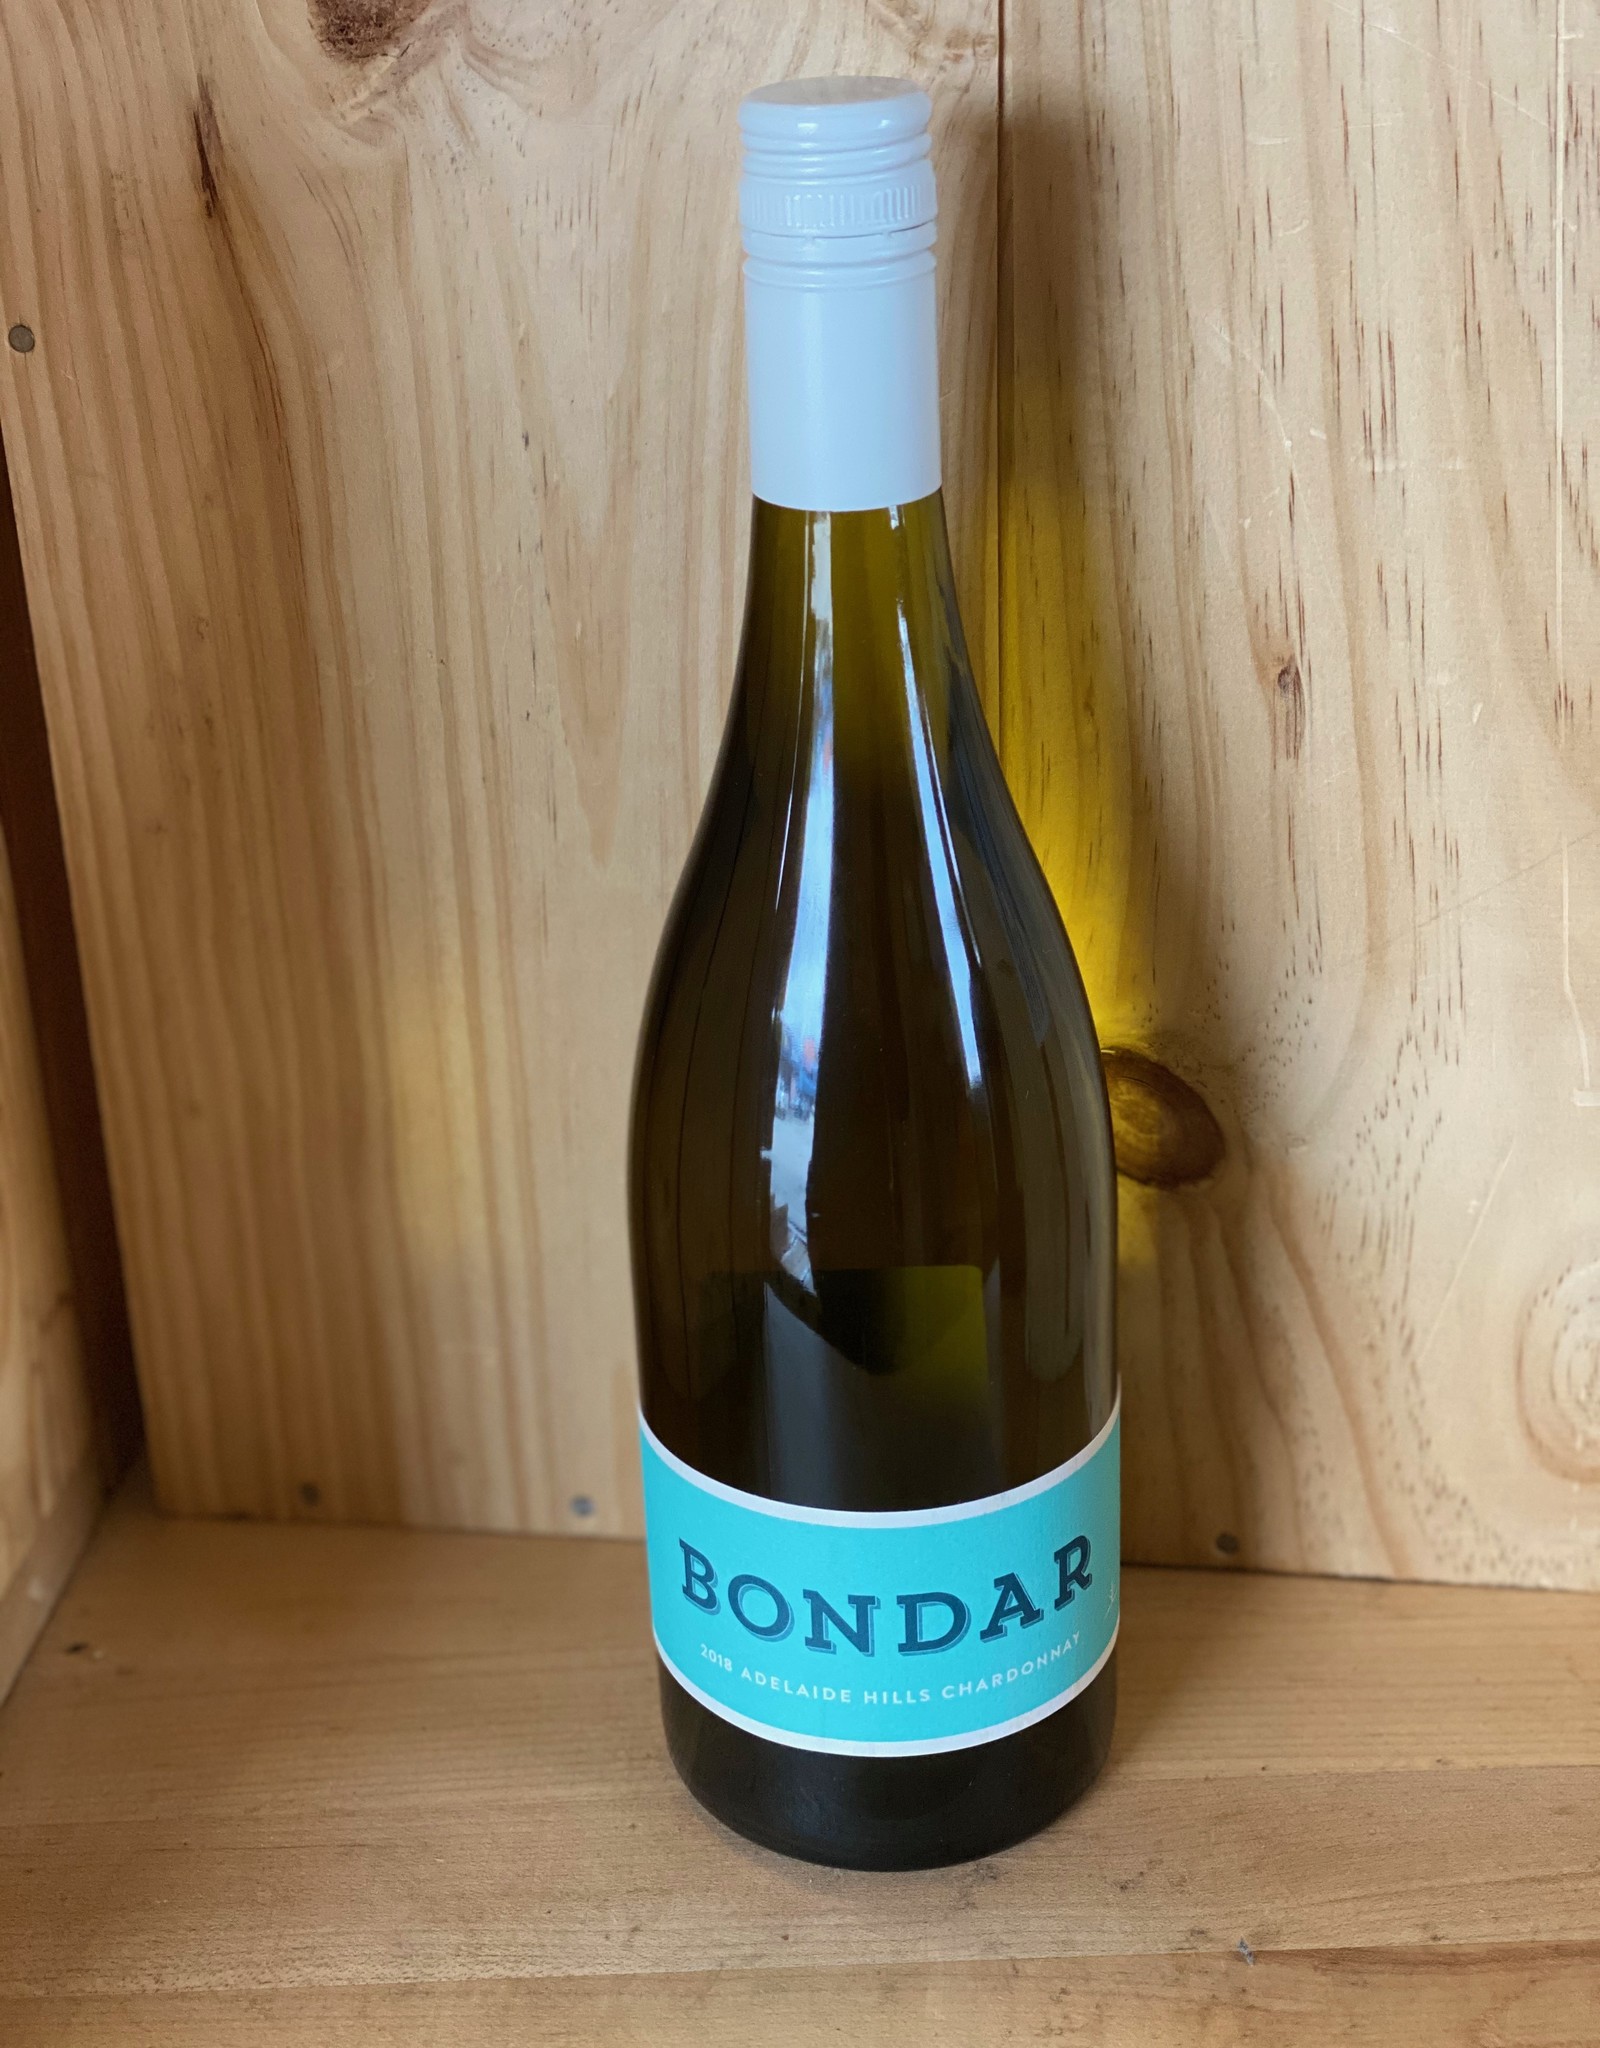 Bondar Chardonnay